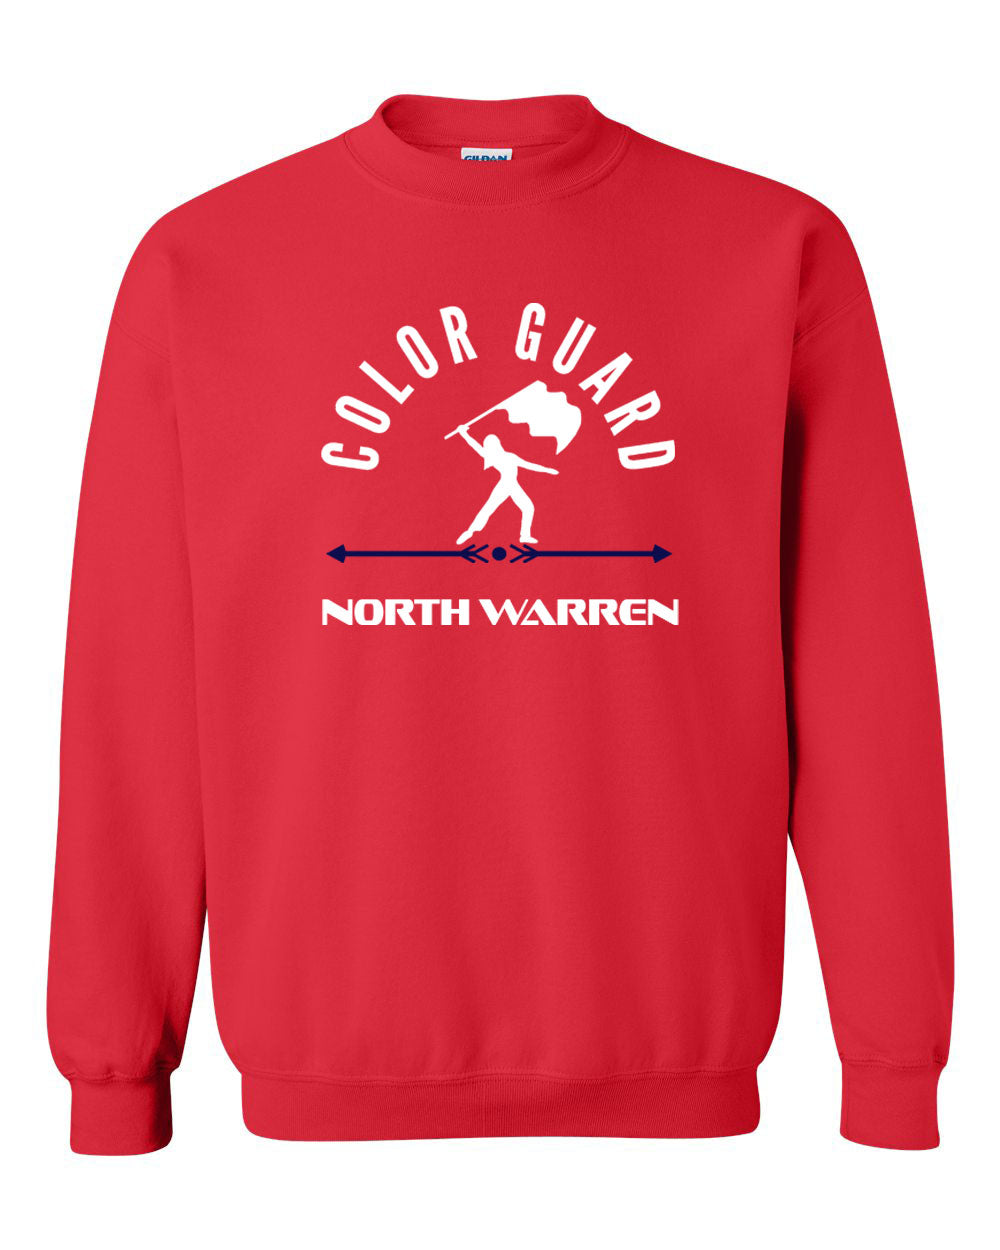 North Warren Marching Band Design 5 non hooded sweatshirt